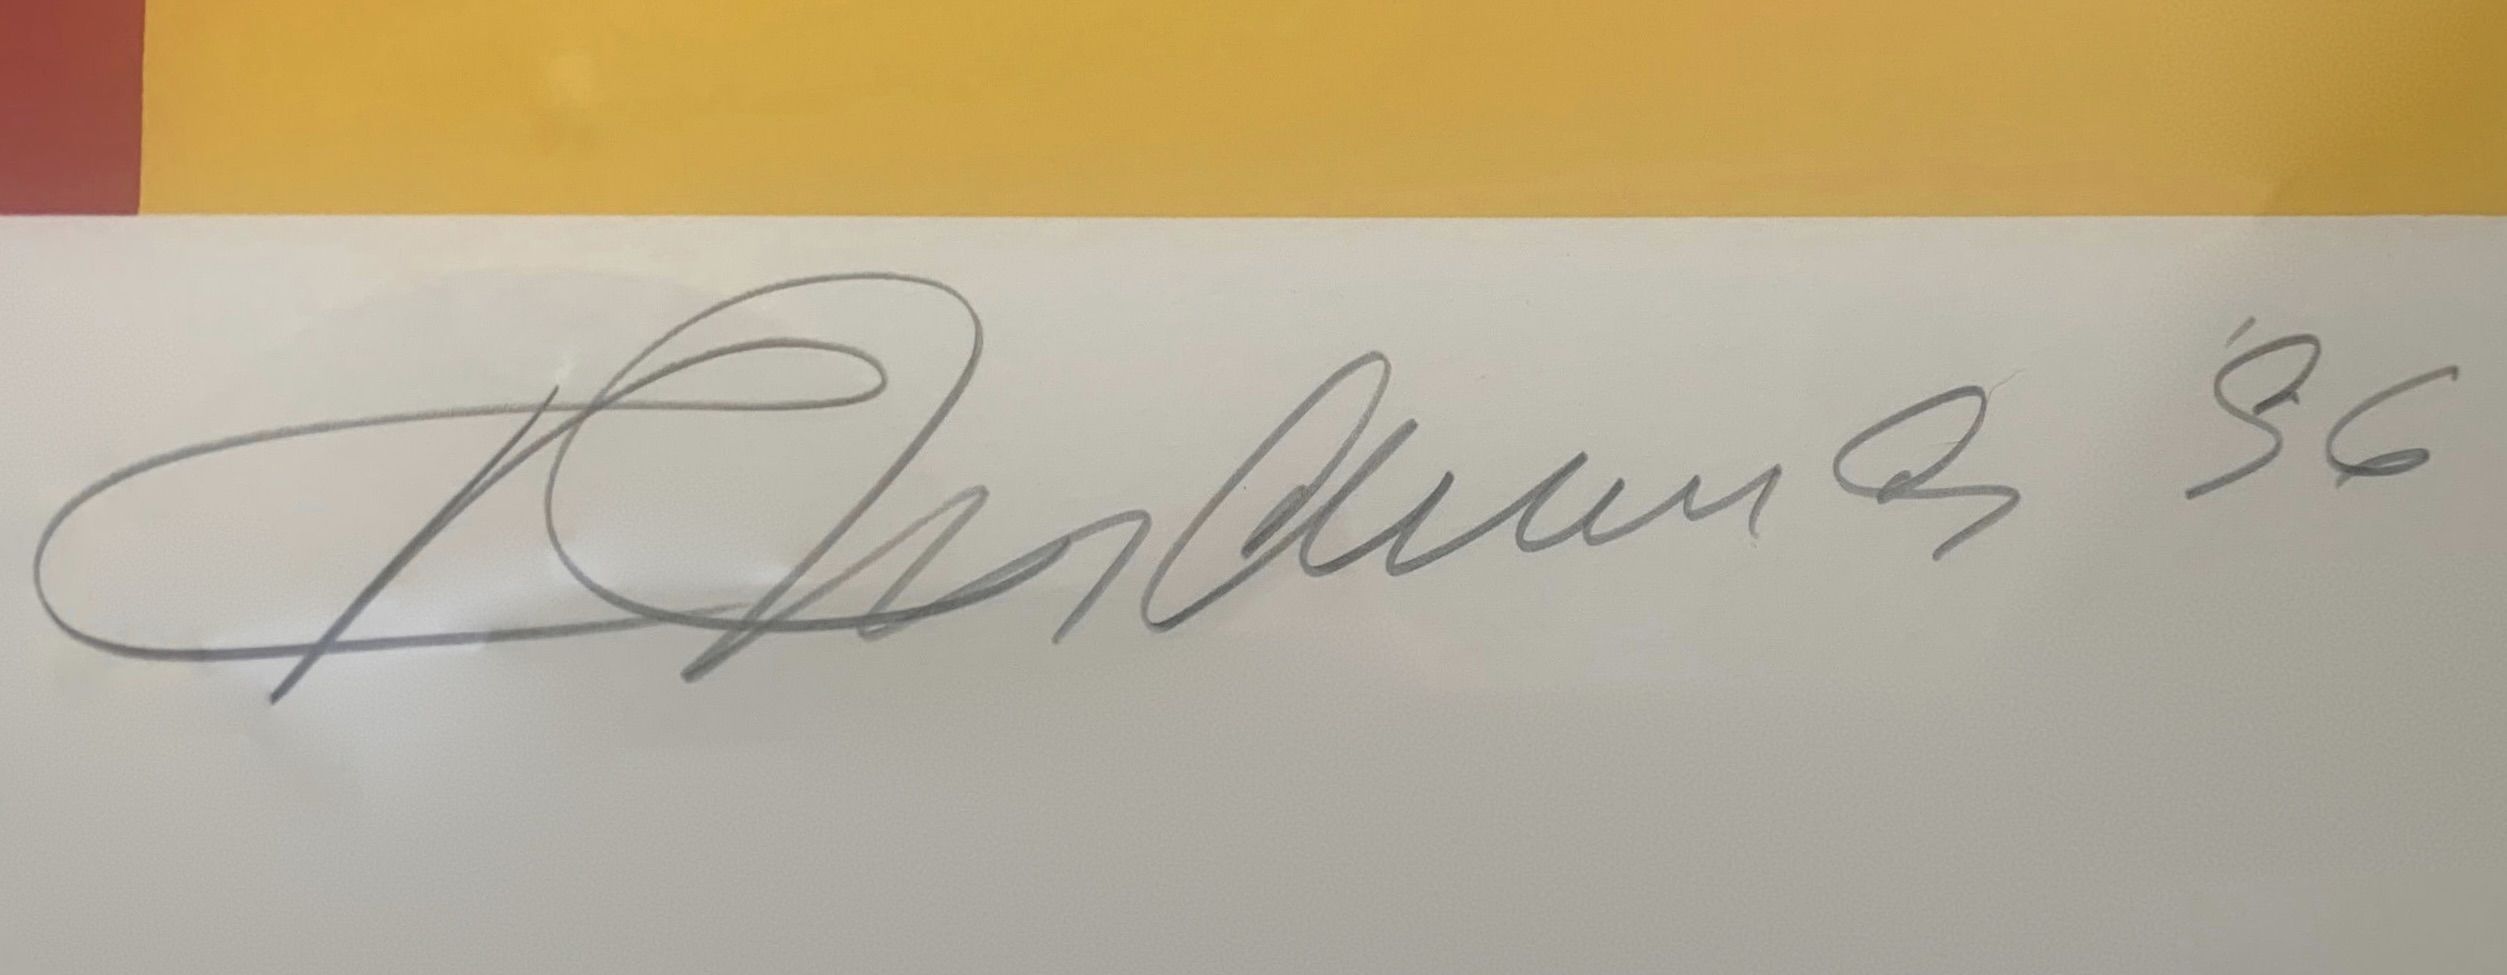 Signature de Robert Indiana